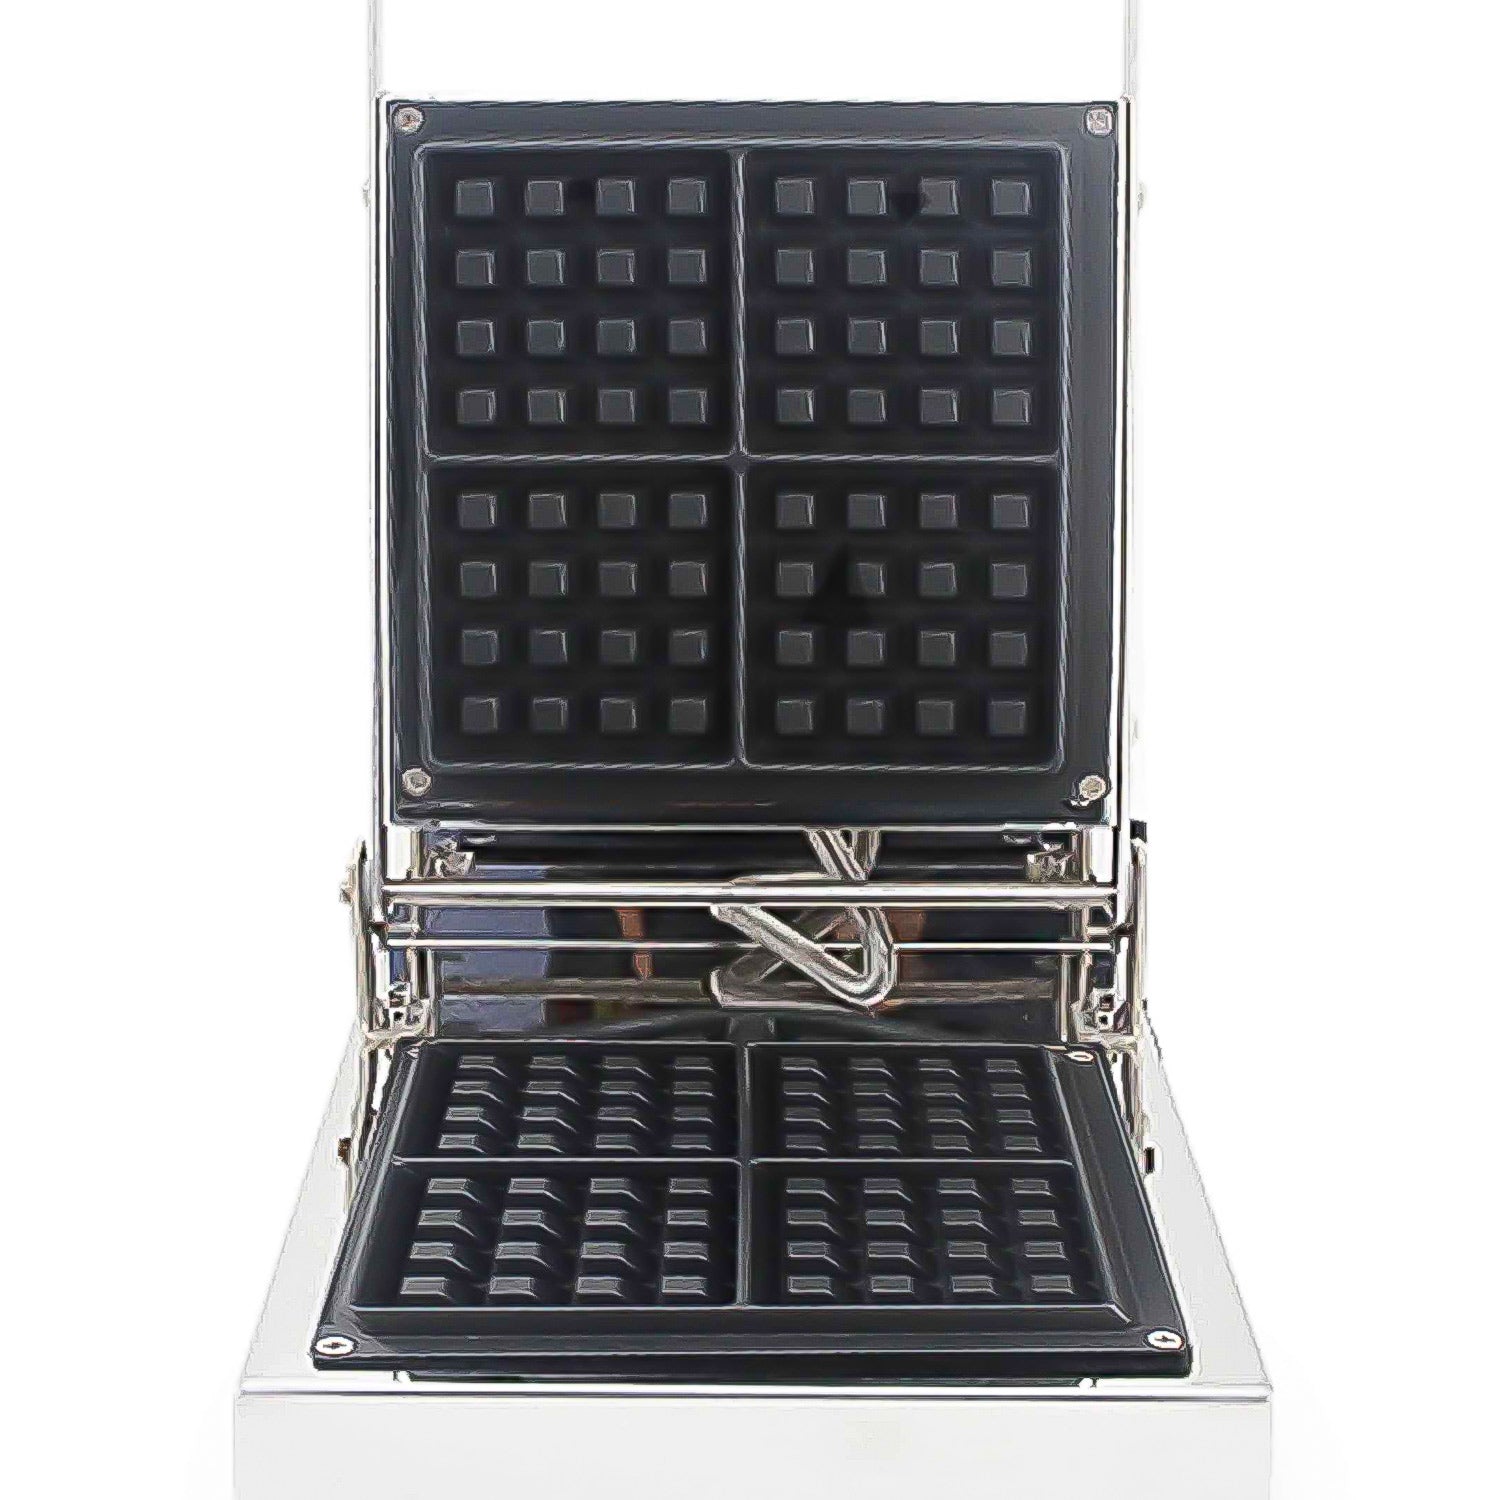 AP-92 Belgian Waffle Maker | Professional Waffle Iron | 4 Square Waffles | Press Type | Nonstick